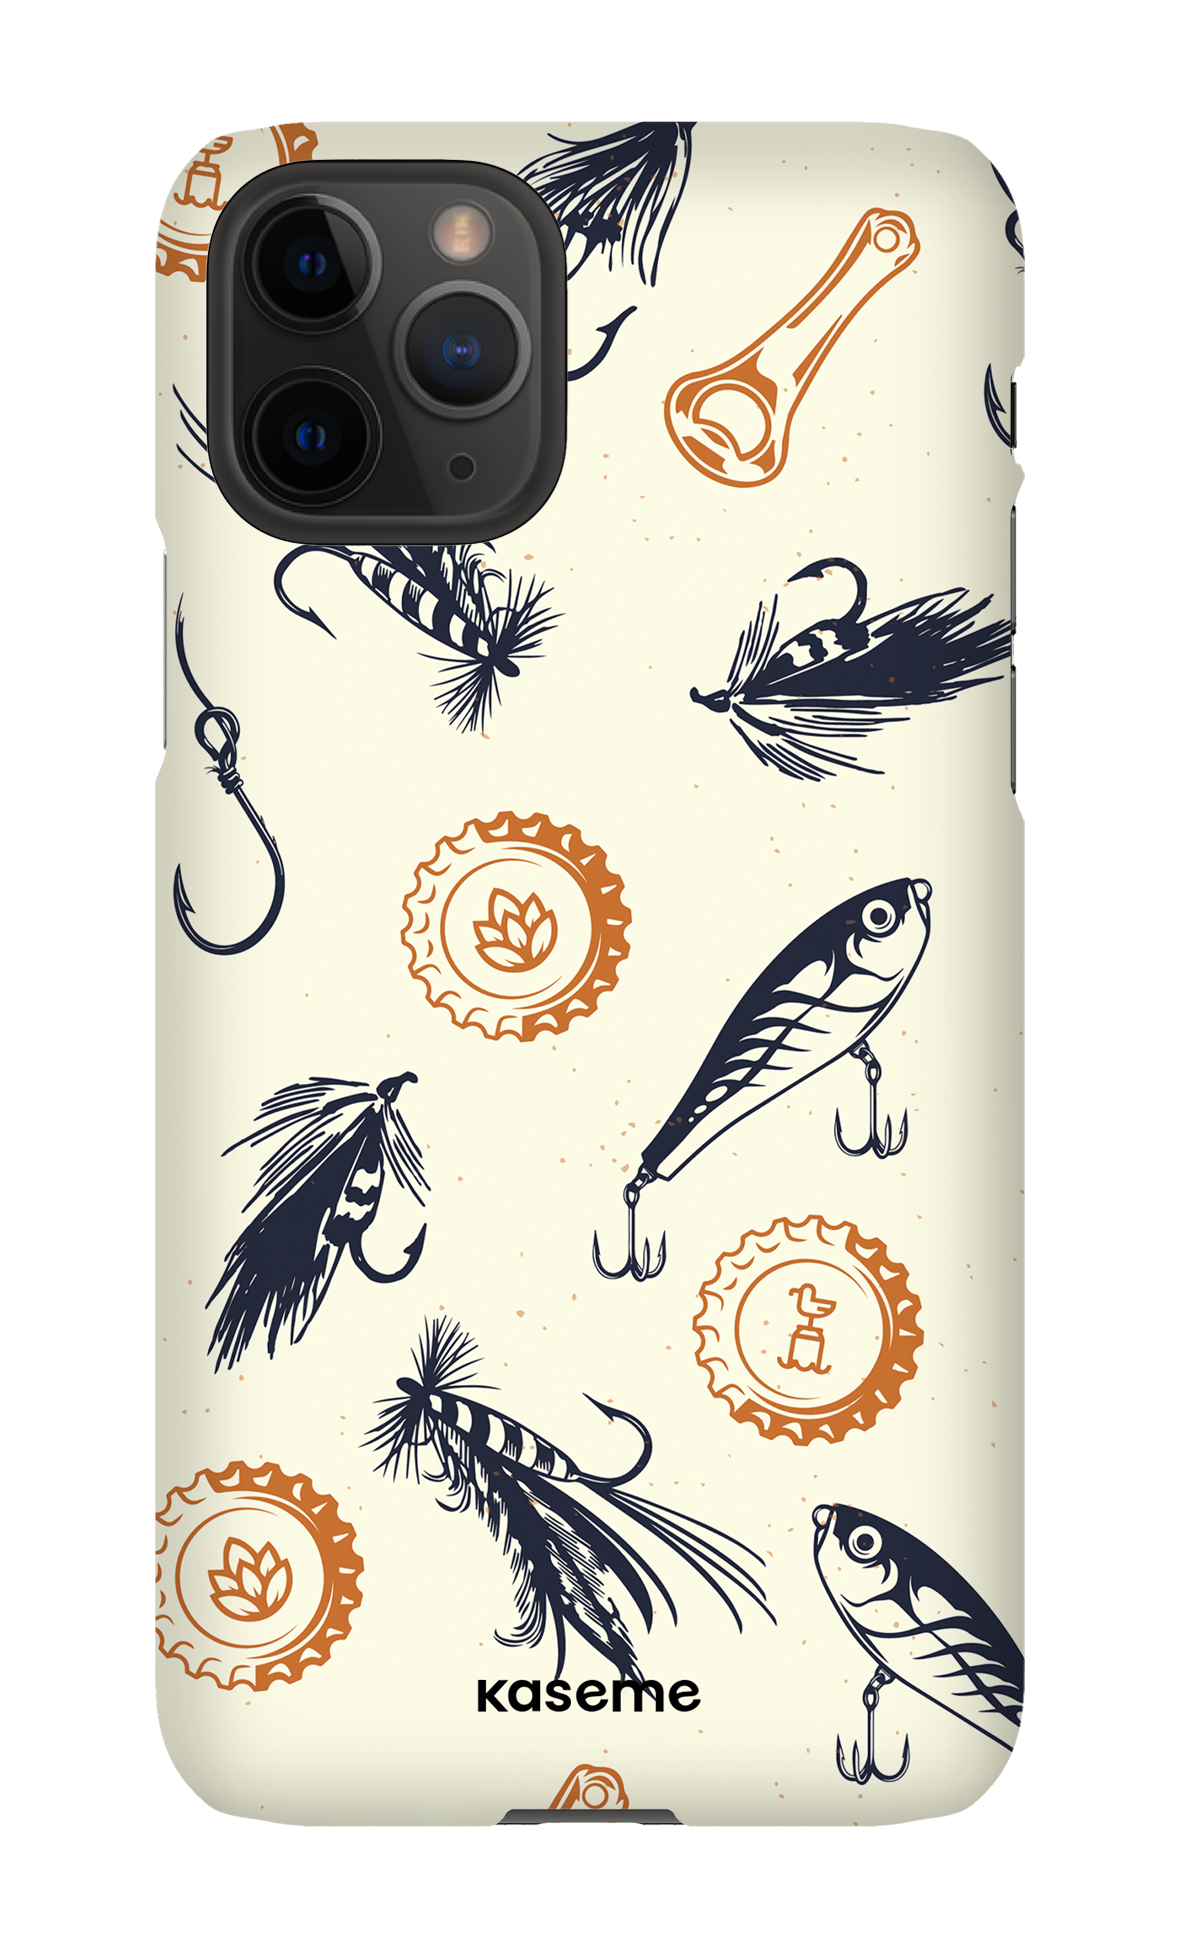 Fishy - iPhone 11 Pro